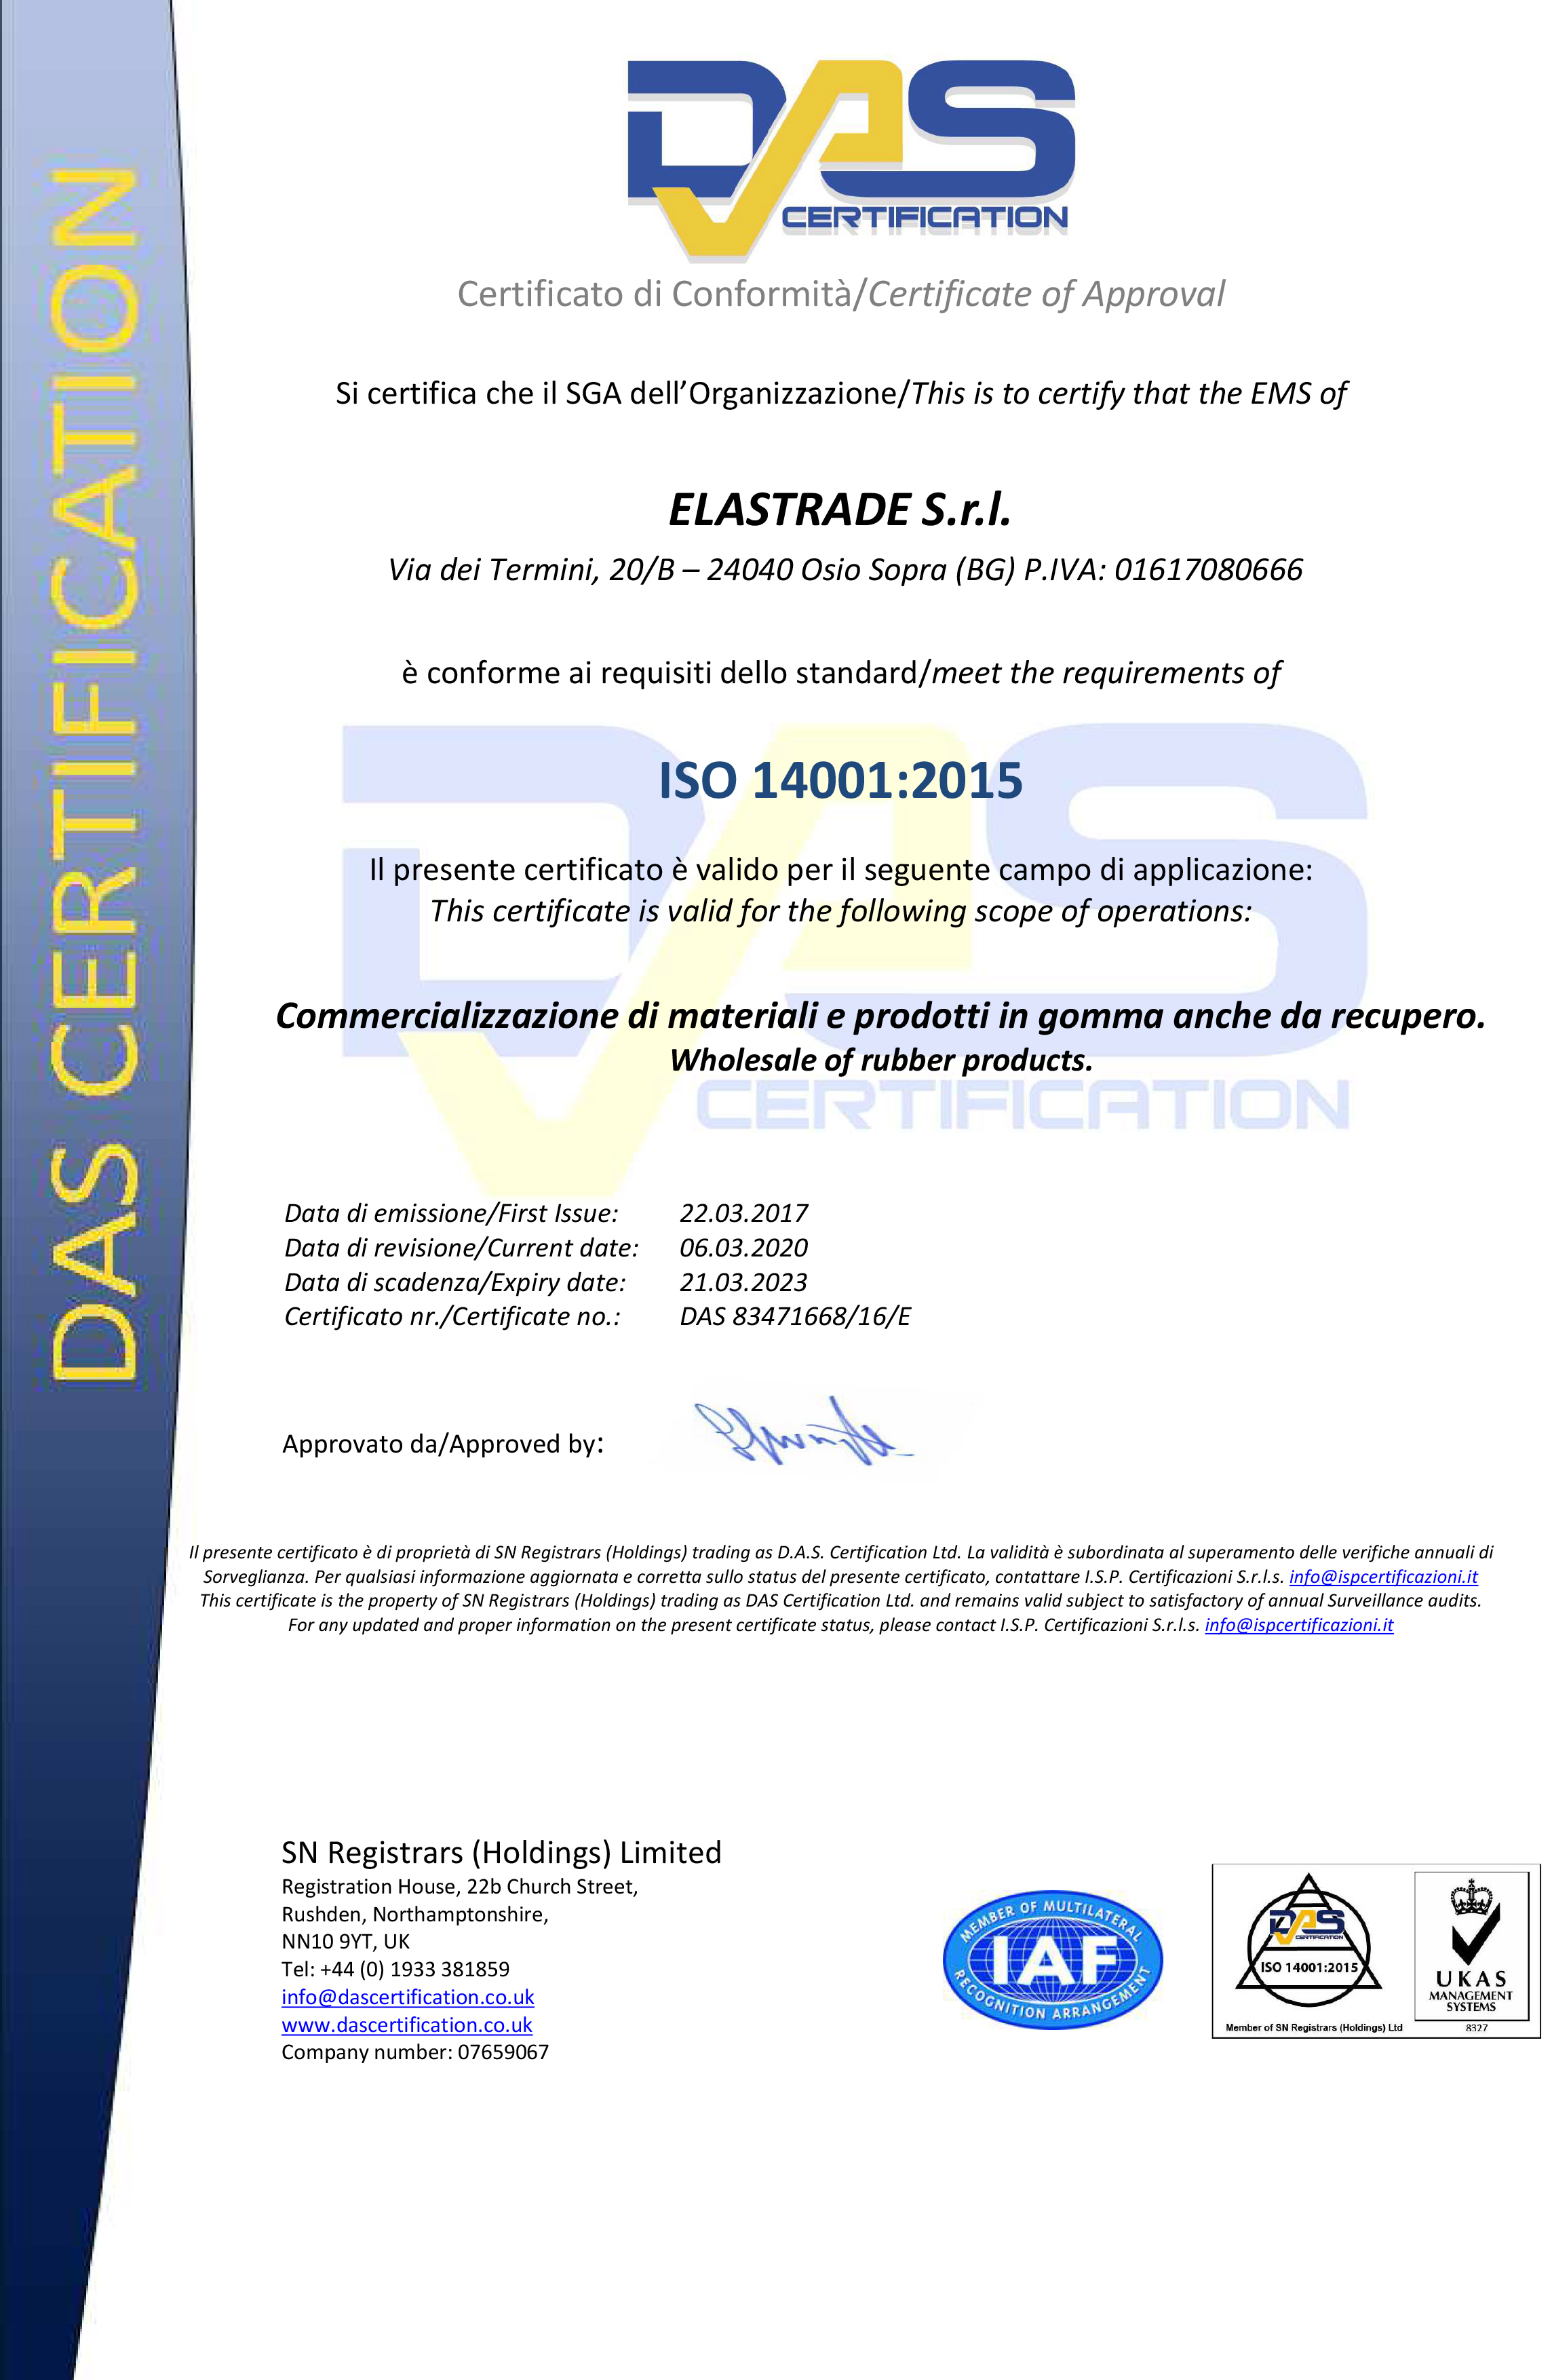 das certification ISO 14001:2015